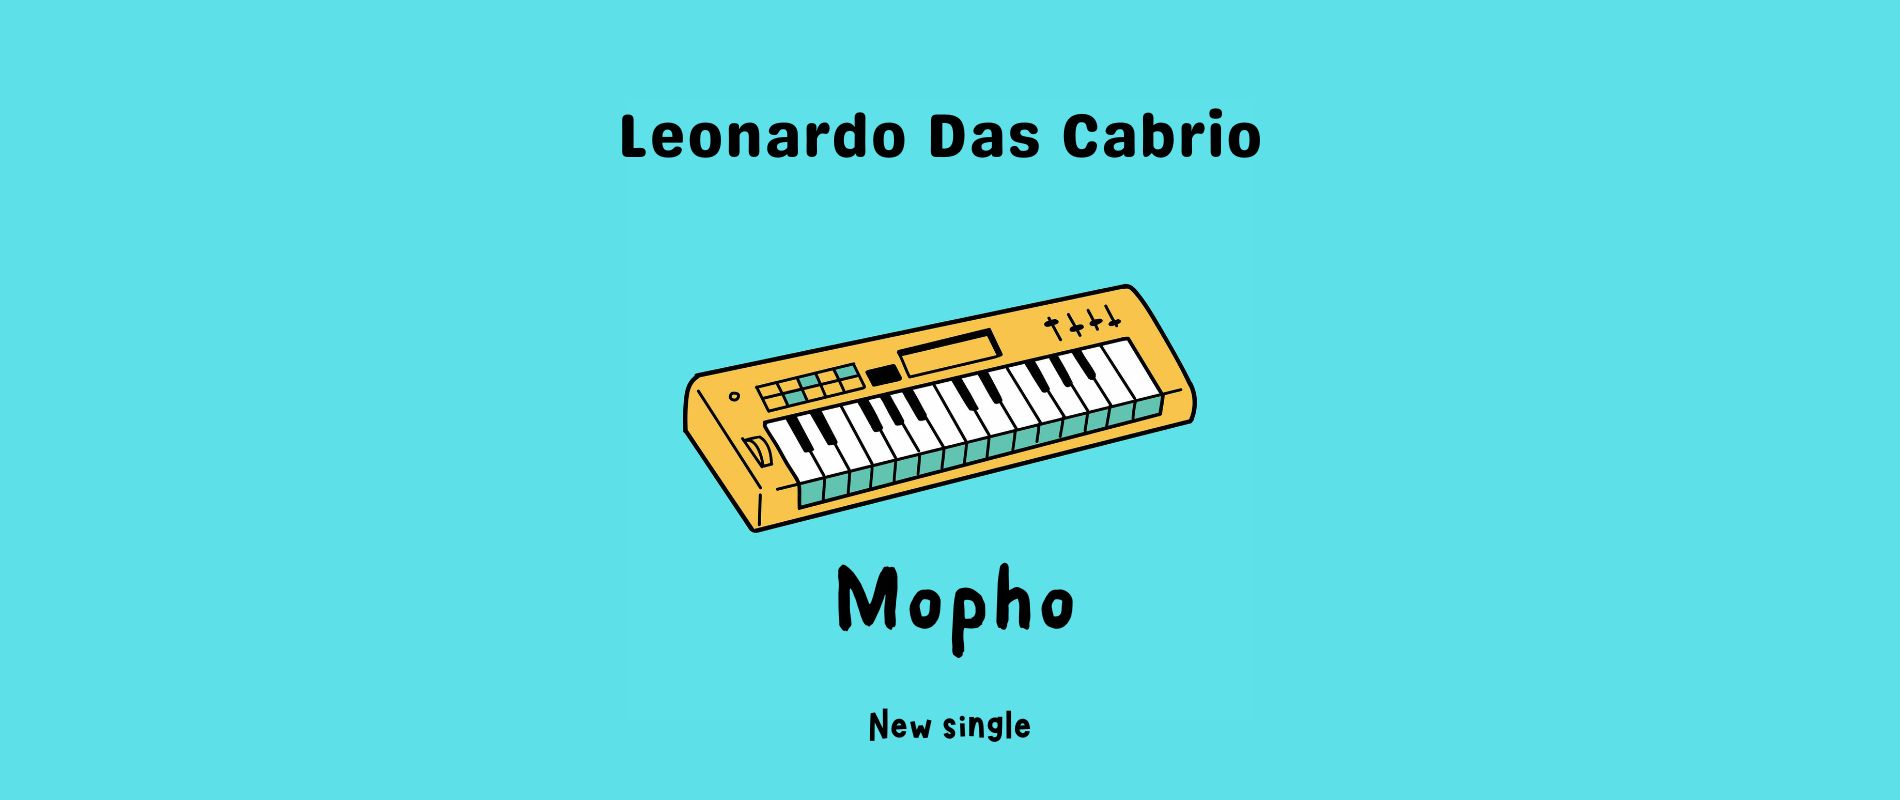 Leonardo Das Cabrio - new single Mopho cover chill lofi house music rnb soul